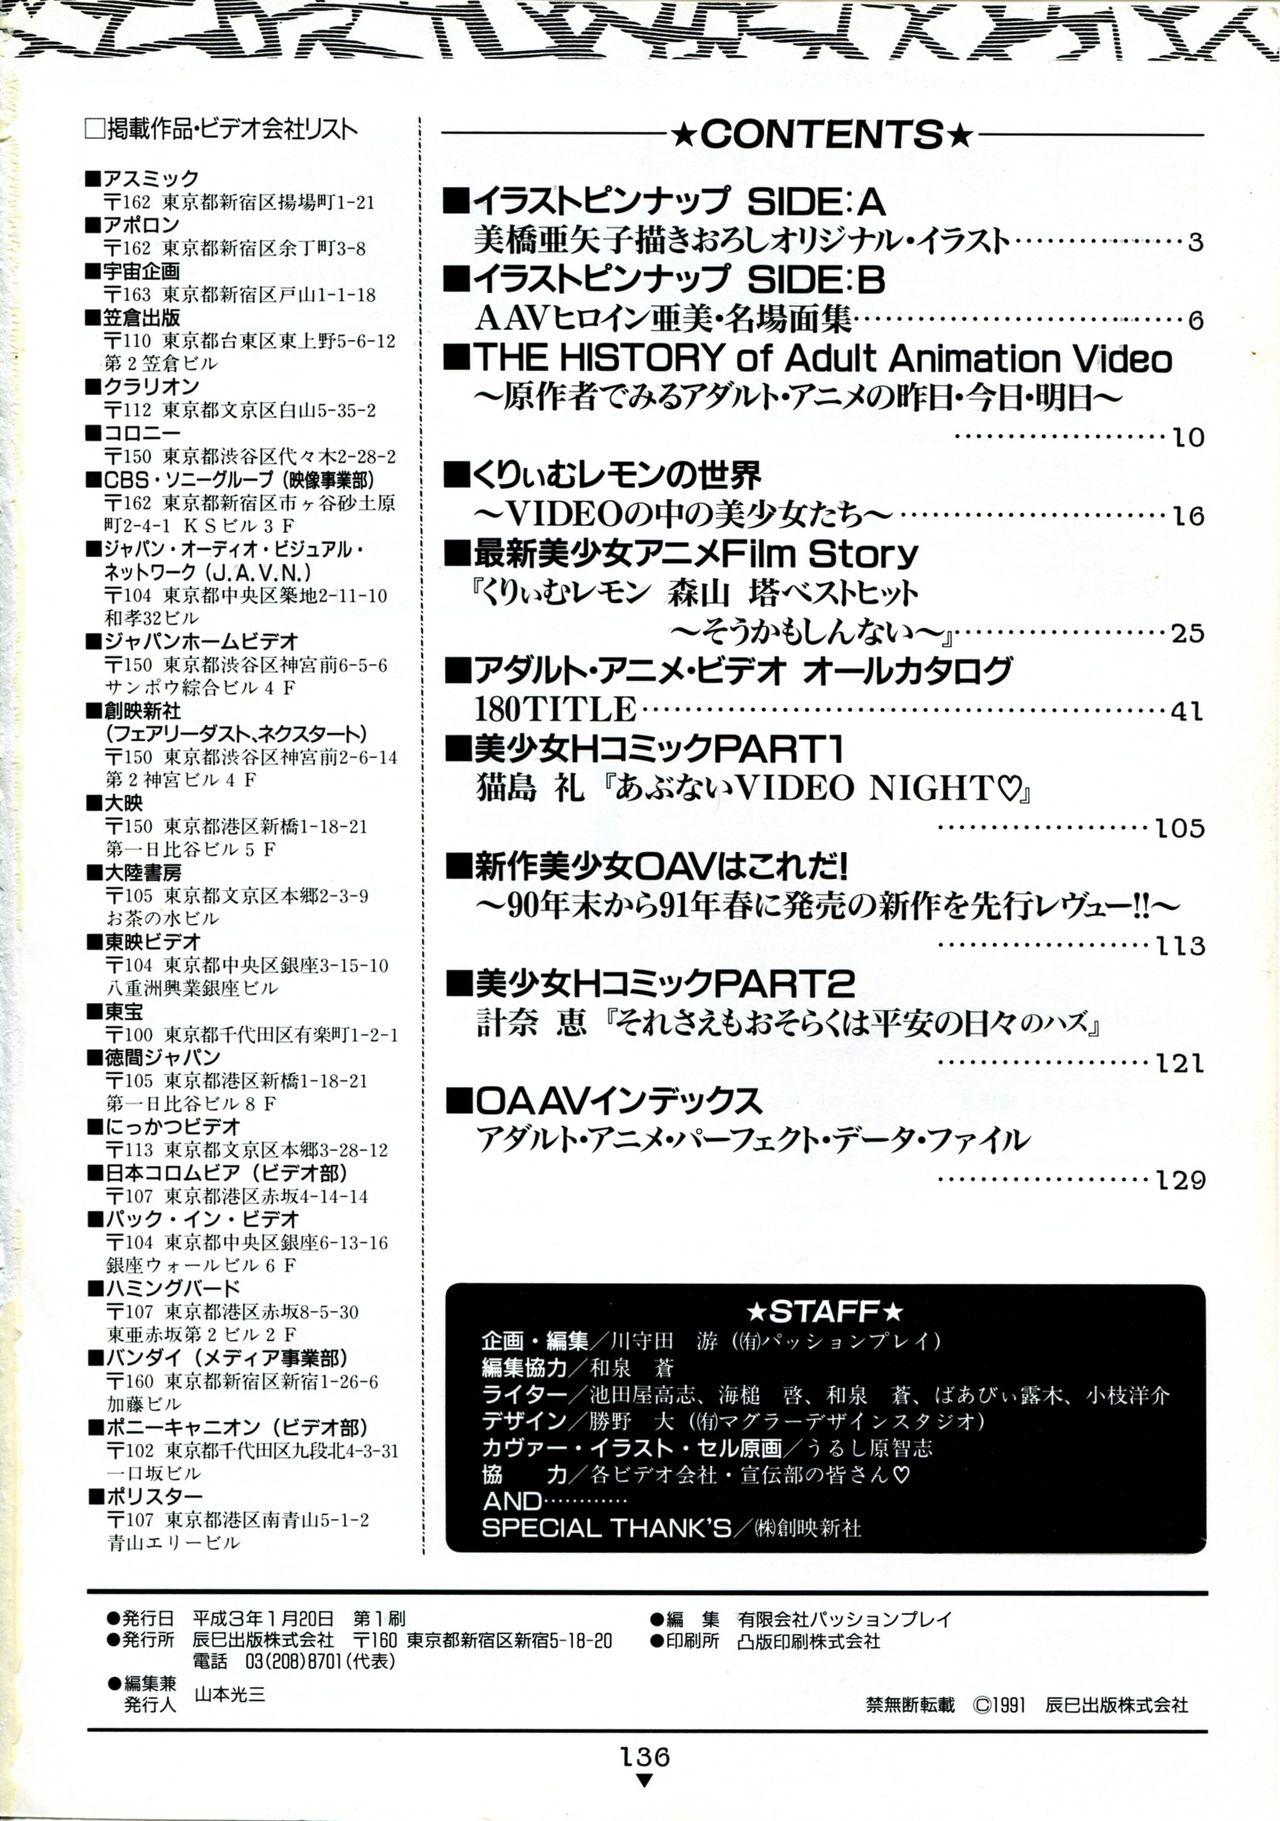 Bishoujo Anime Daizenshuu - Adult Animation Video Catalog 1991 131